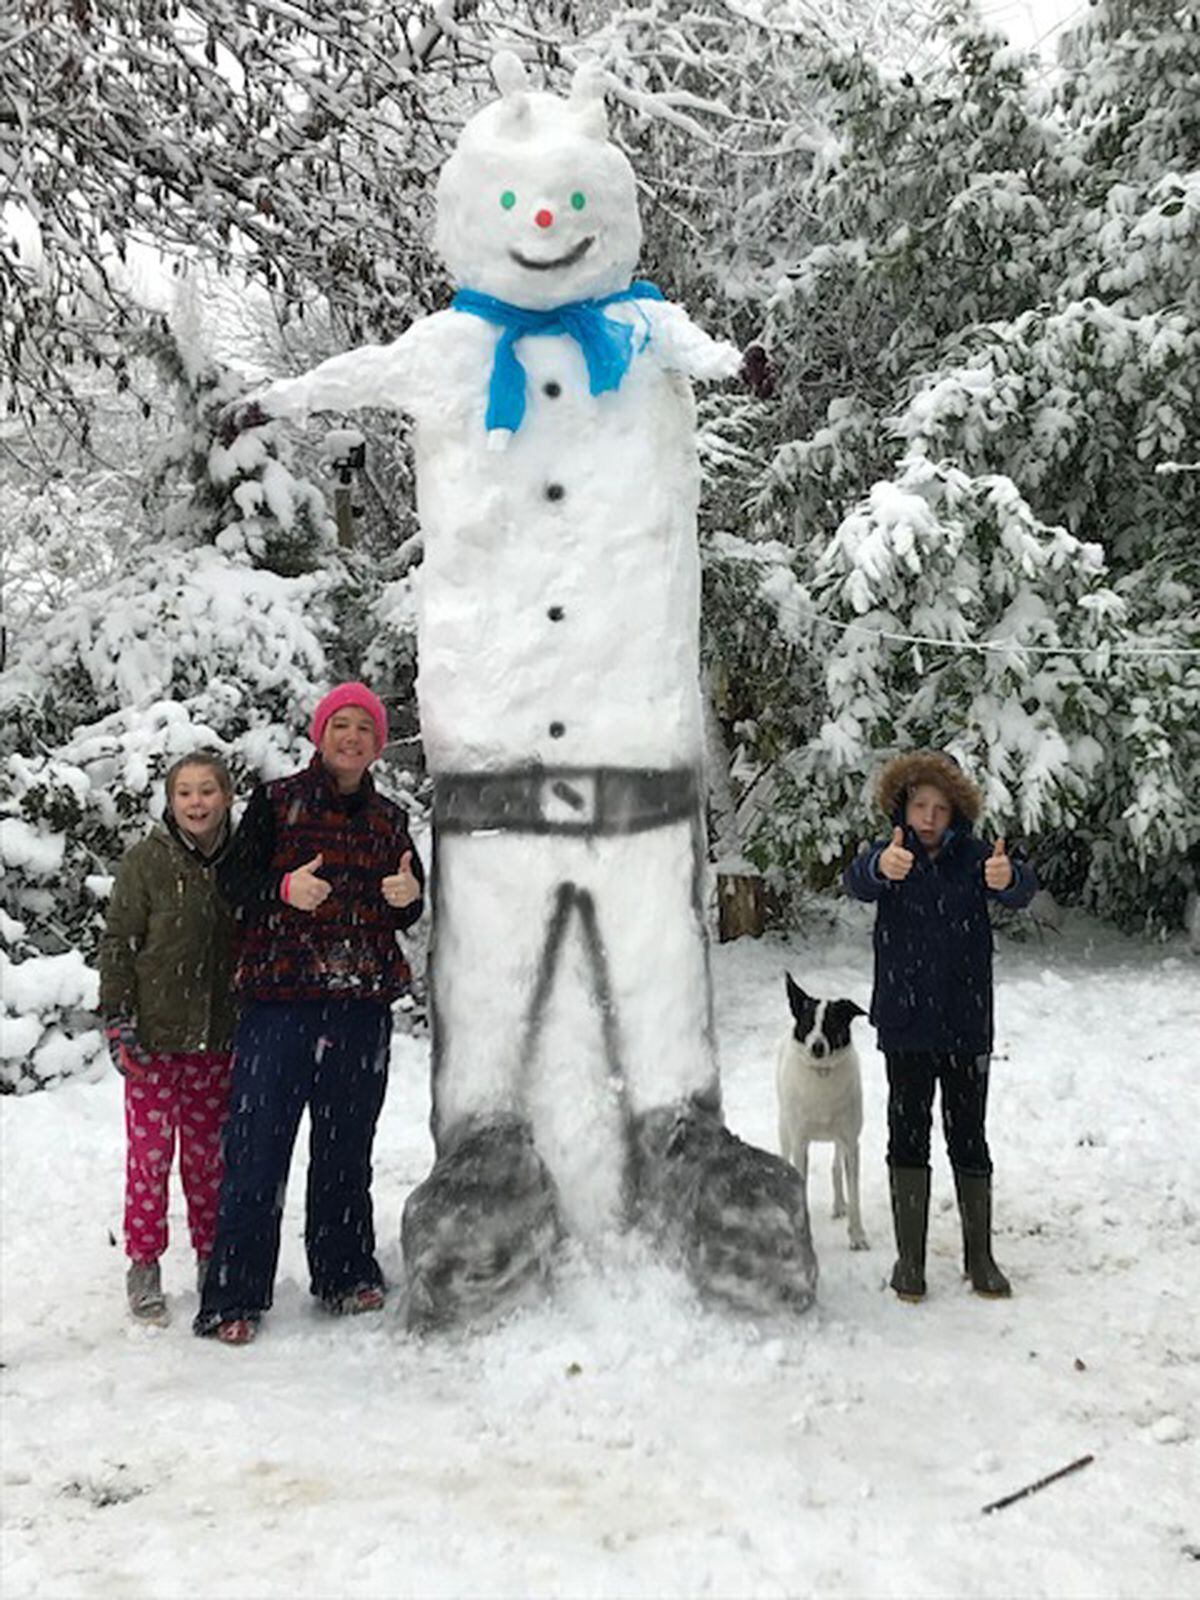 Creating their giant snow cat were Ellie, Tony, Abbie and Joe Metcalfe from Birmingham